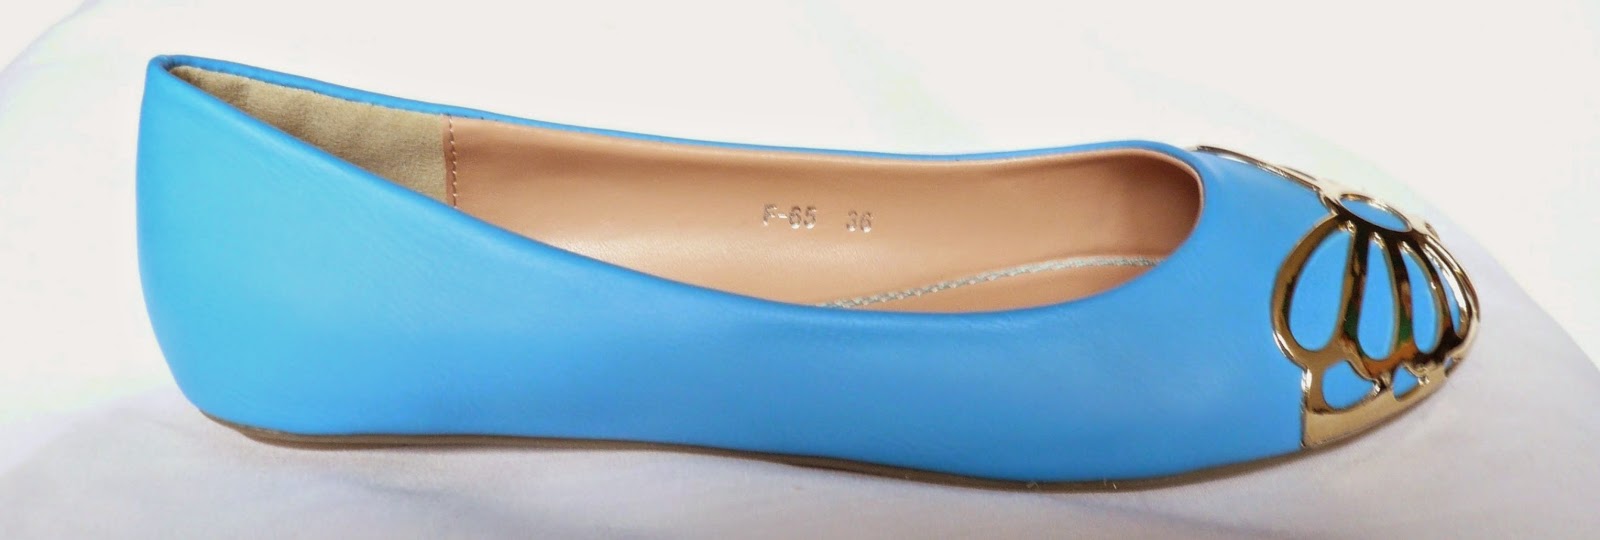 http://www.ebay.fr/itm/ballerines-femme-papillon-bleues-ballerine-interieur-cuir-petit-prix-bleu-/300885564797?ssPageName=STRK:MESE:IT